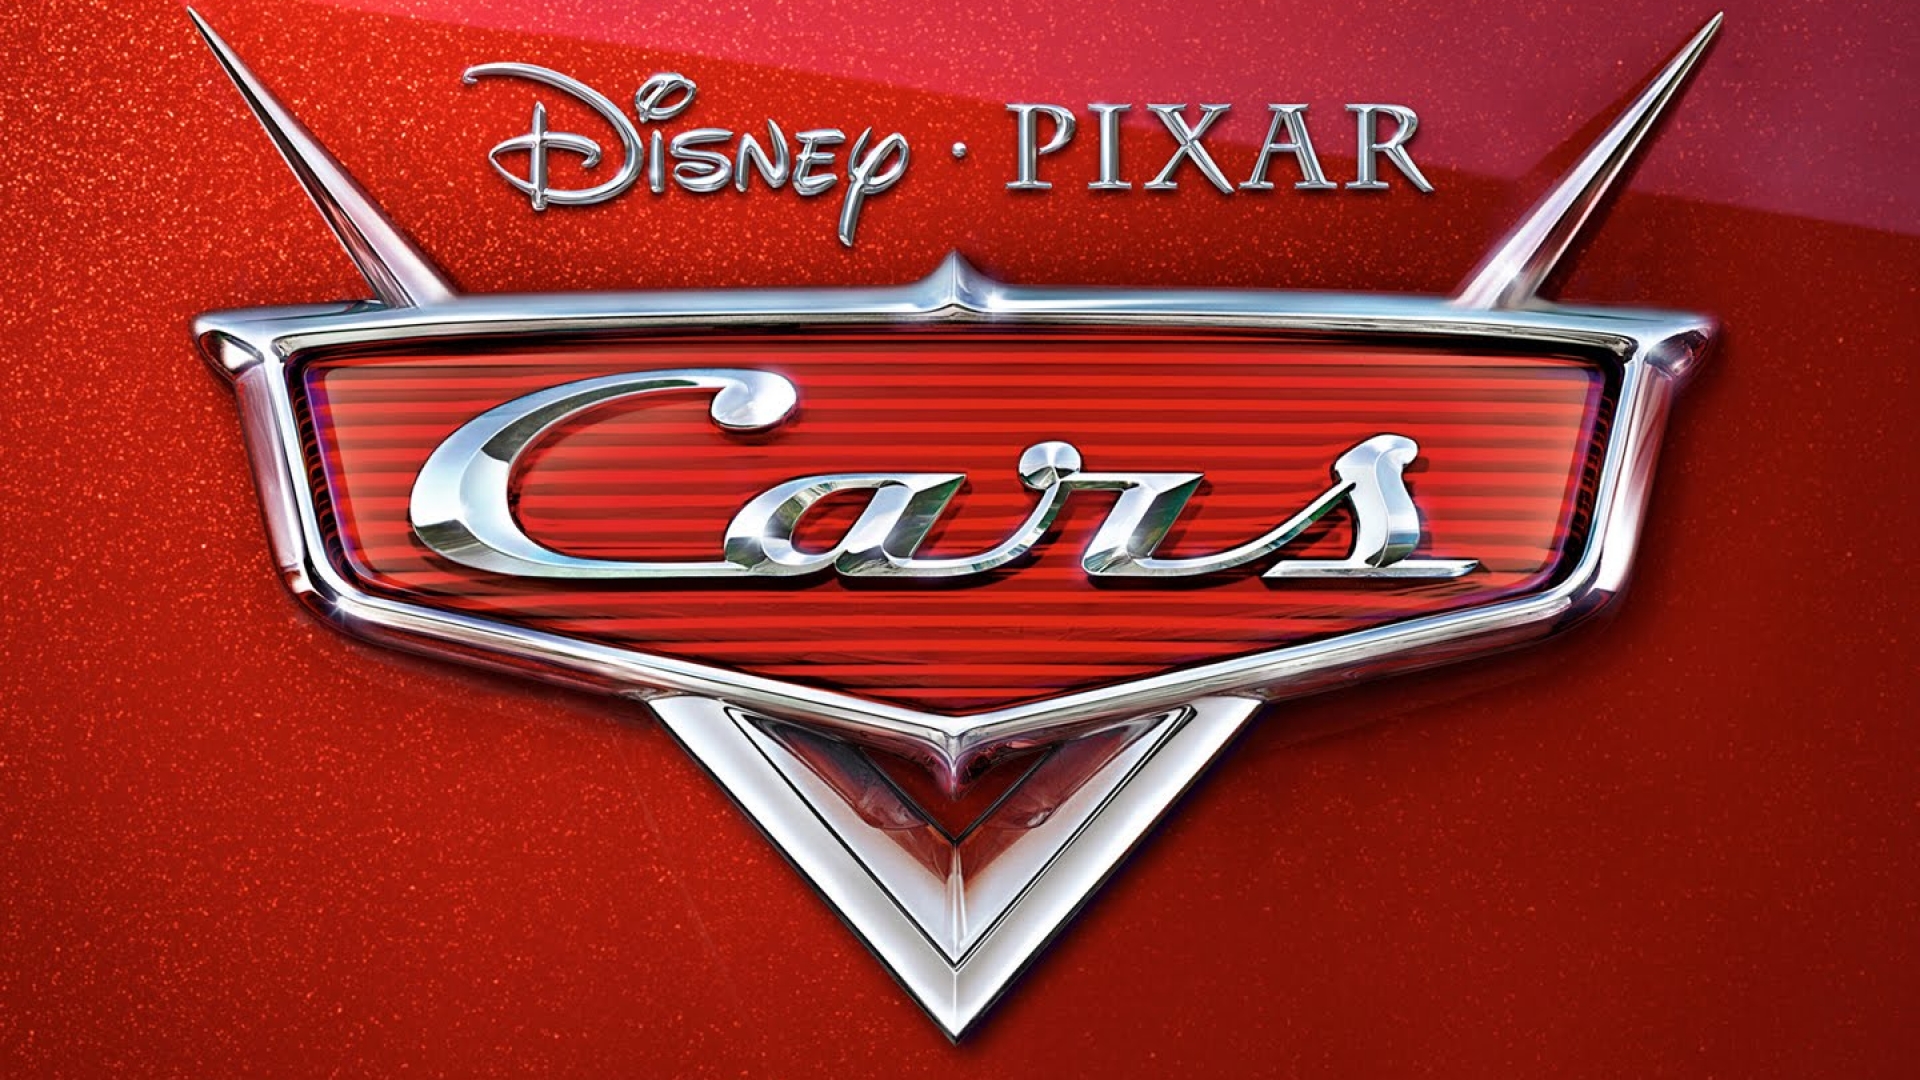 Disney Pixar Cars Wallpaper HD